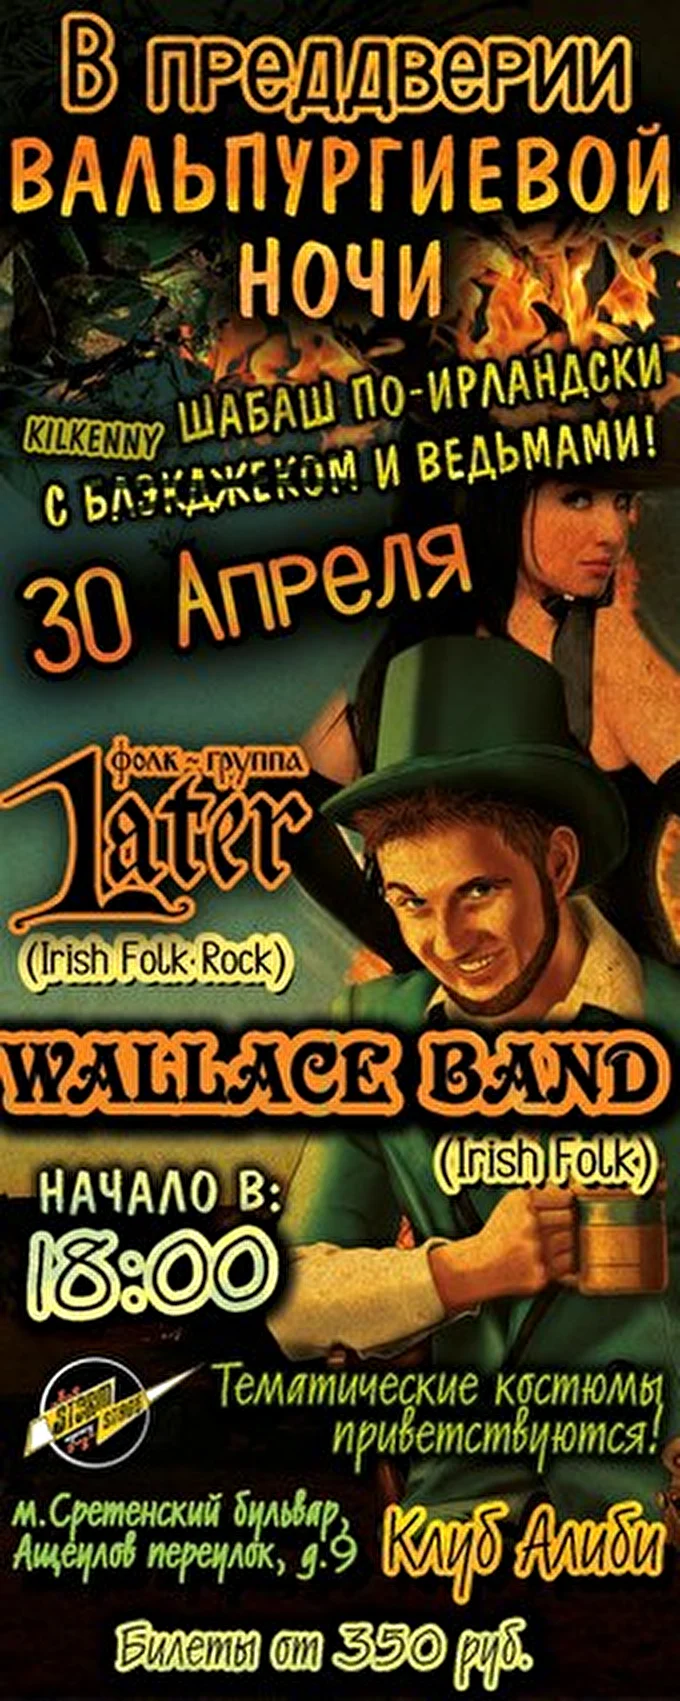 Wallace band - Уоллас бэнд 27 апреля 2015 Алиби Москва